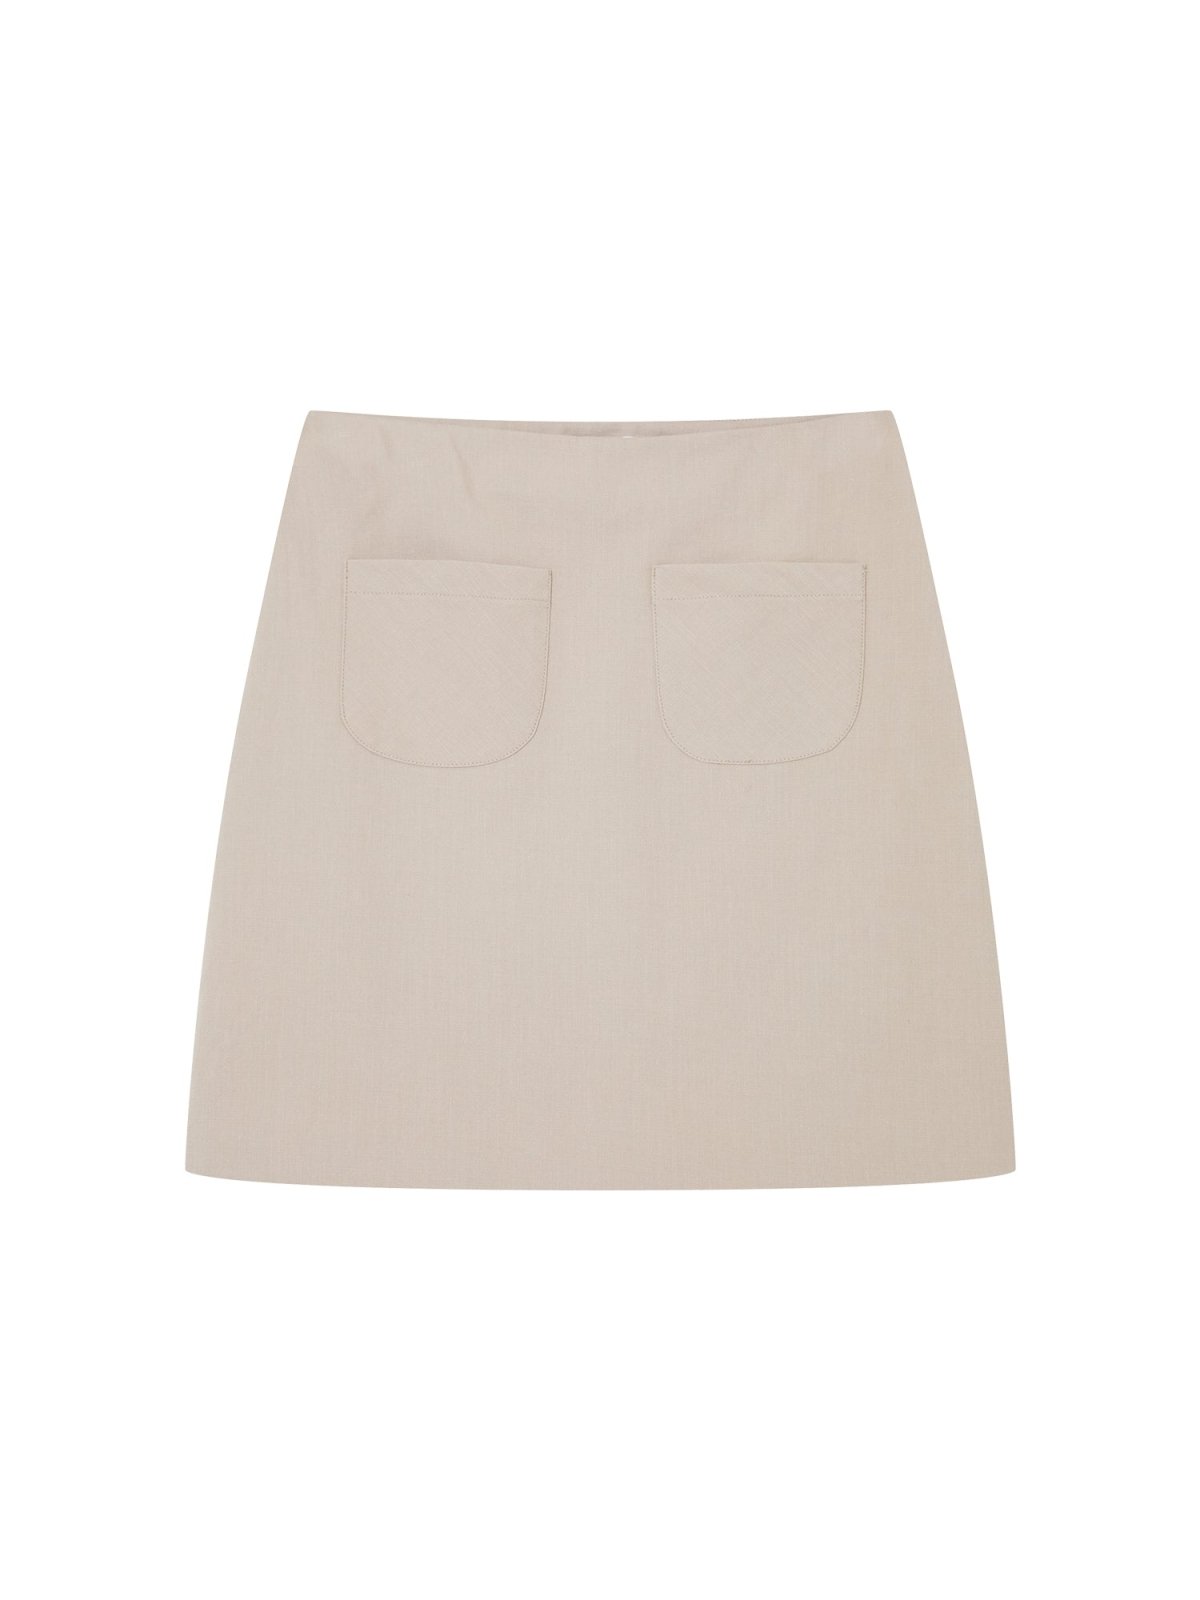 Pocket Detail Mini Skirt - DAG-DD8896-21CreamS - Beige - S - D'ZAGE Designs